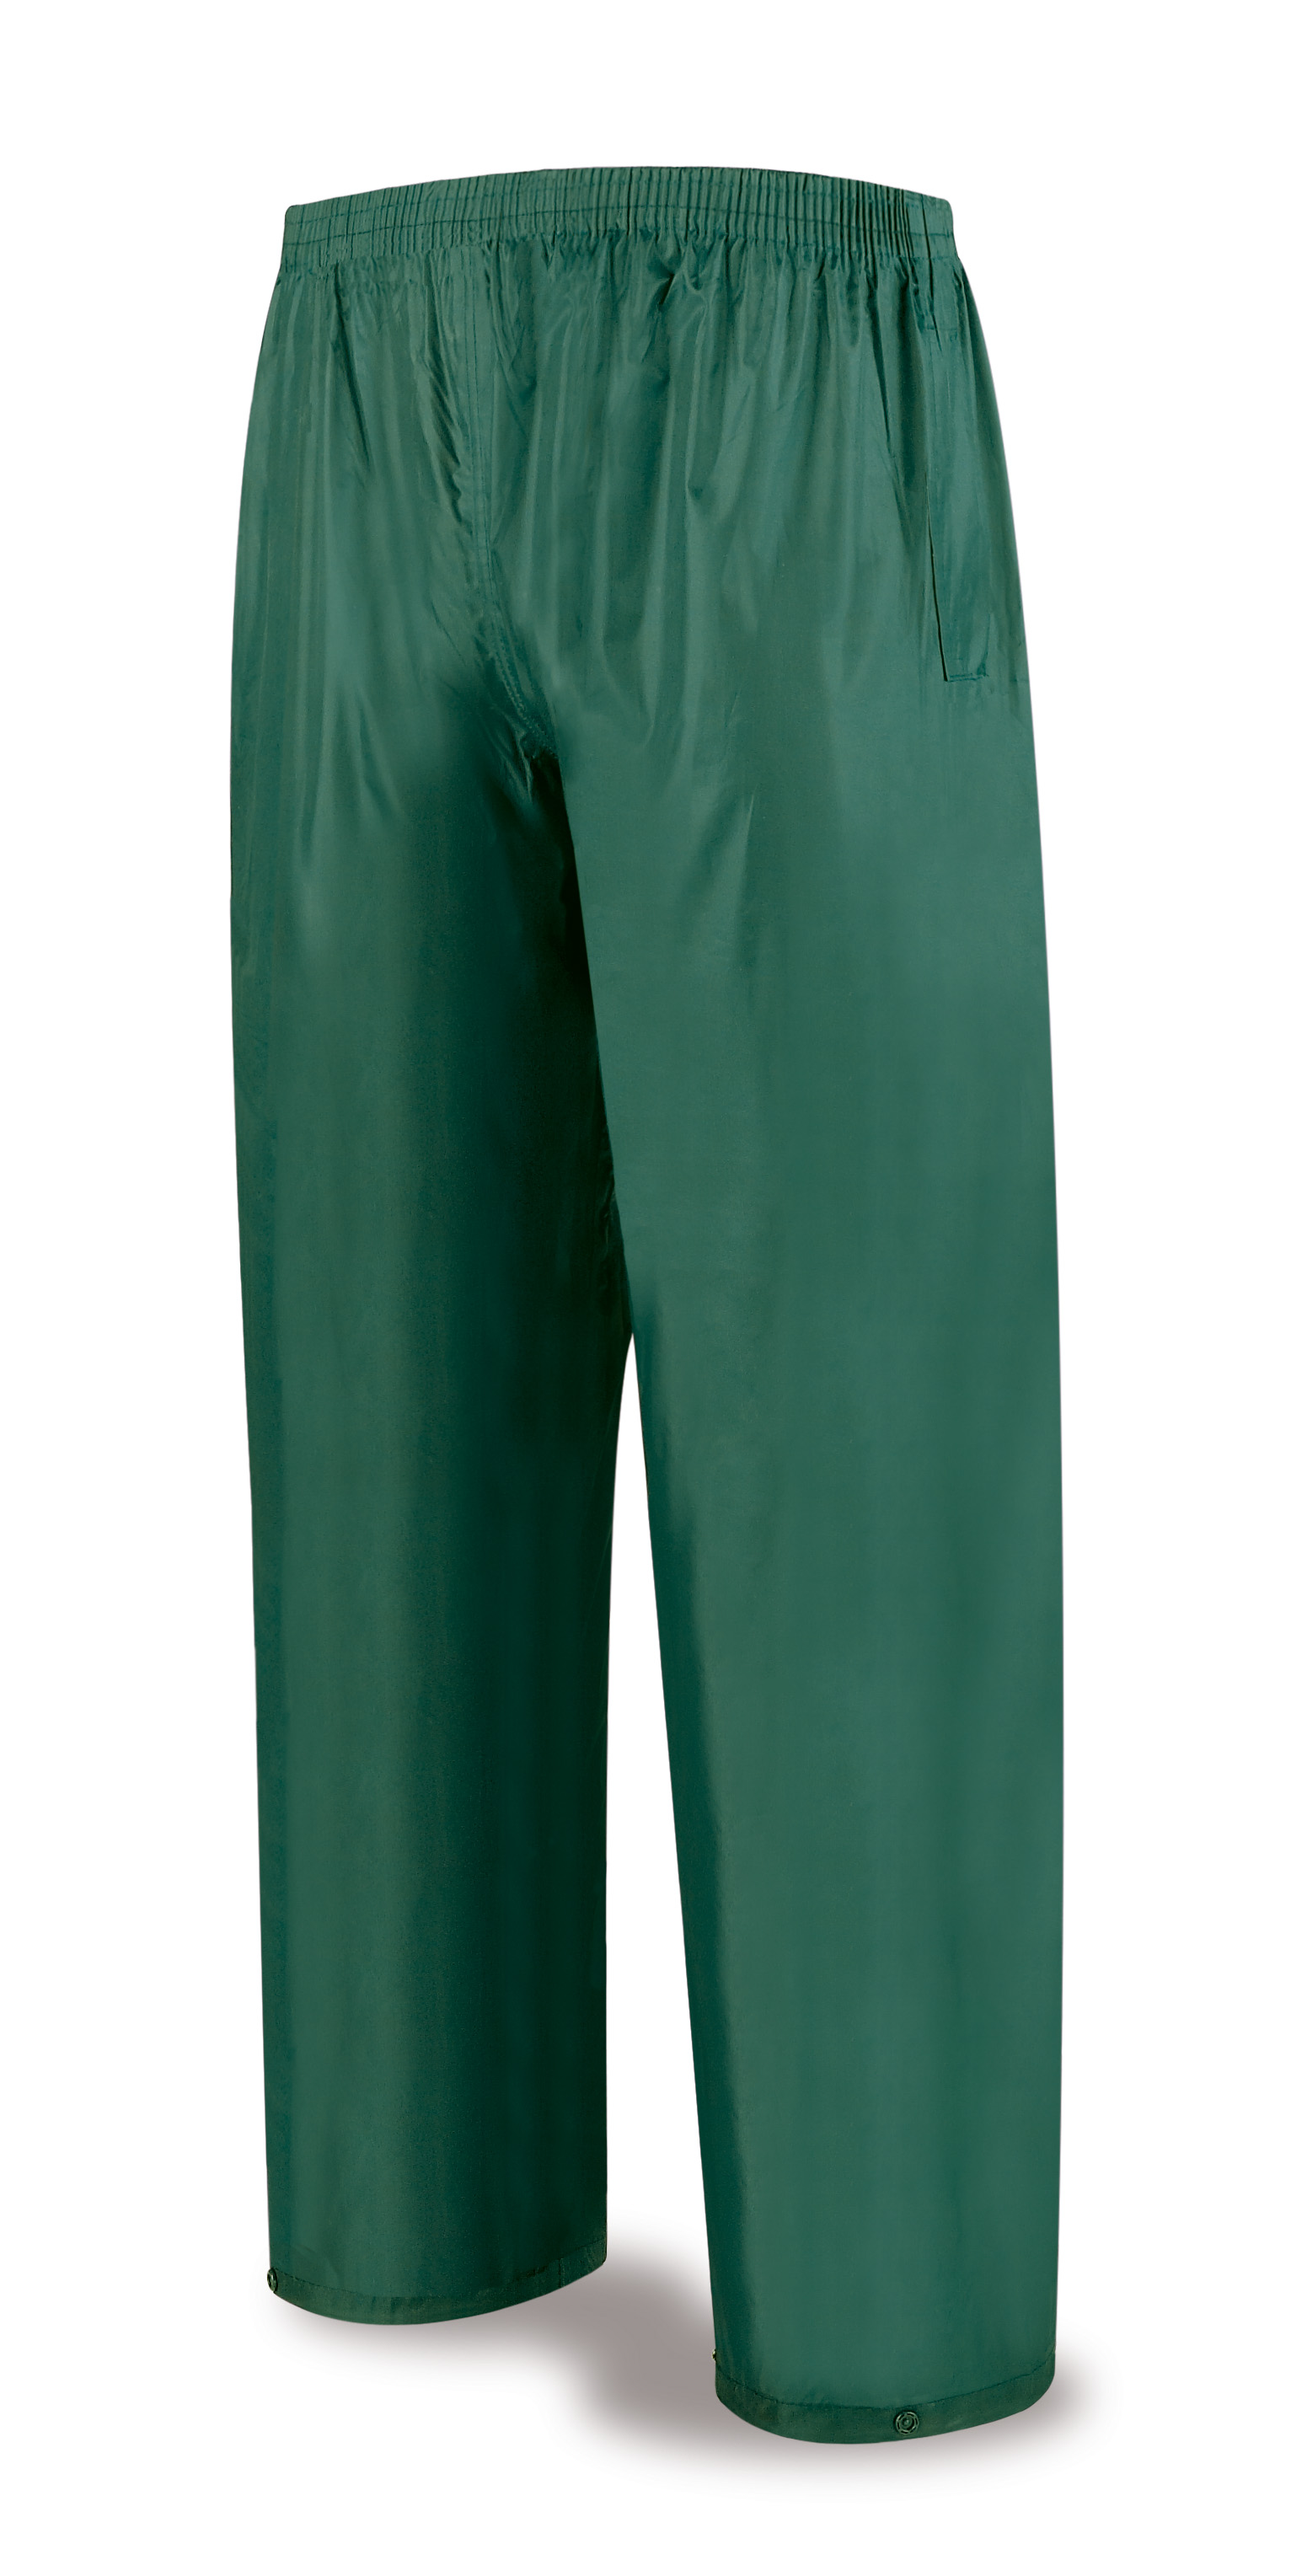 188-PAIV Coats and Rain Gear Rain Gear Pants of water. ENGINEER. Color green